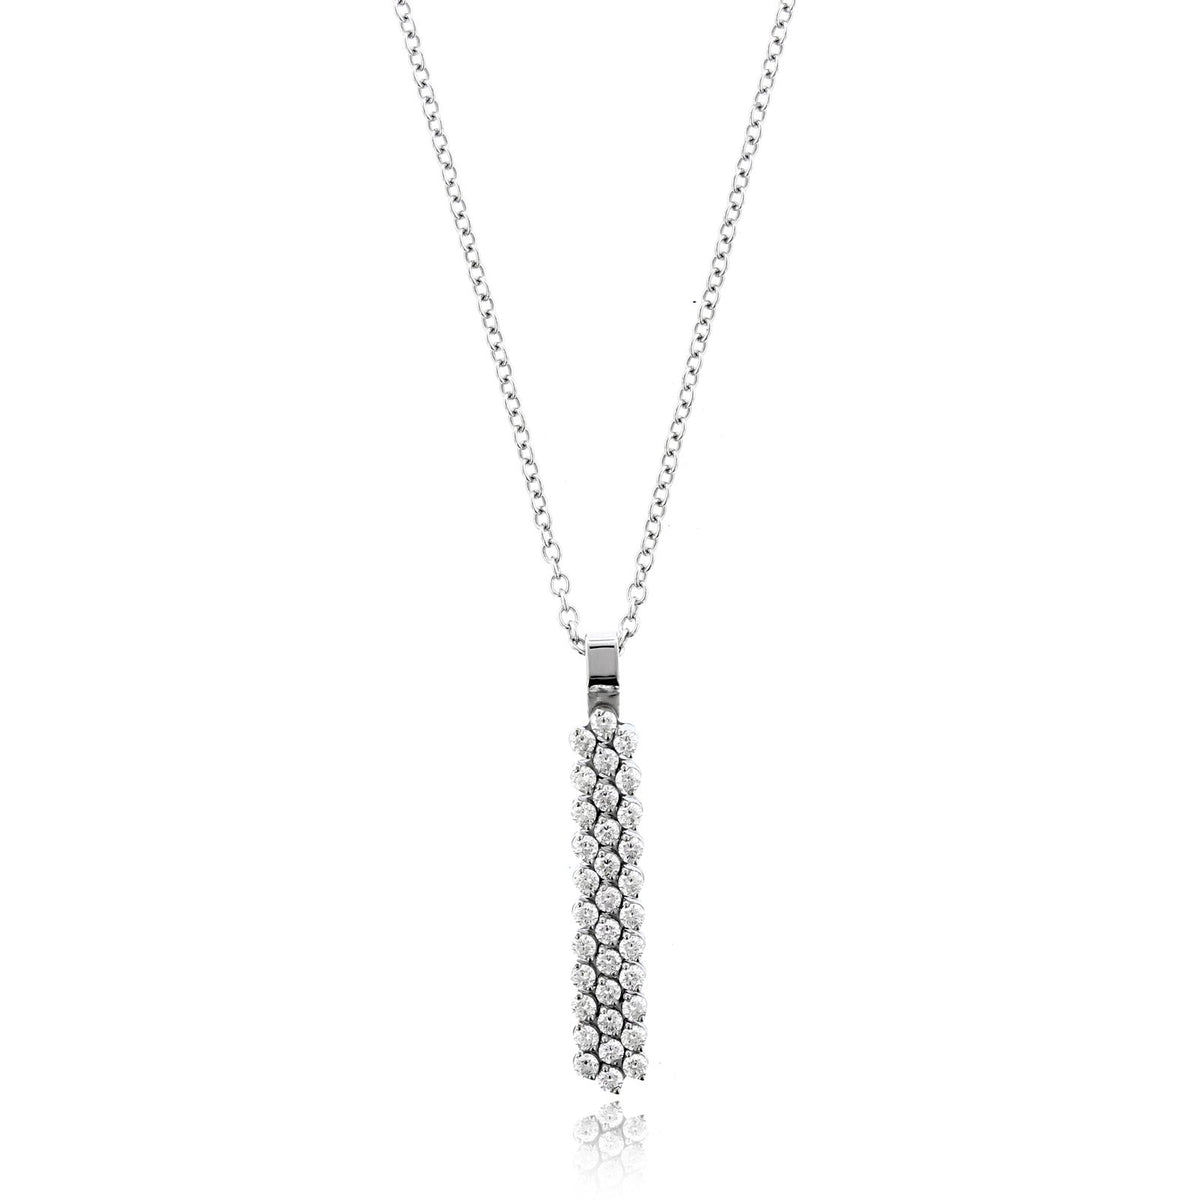 18K White Gold Three-Row Adjacent Diamond Necklace